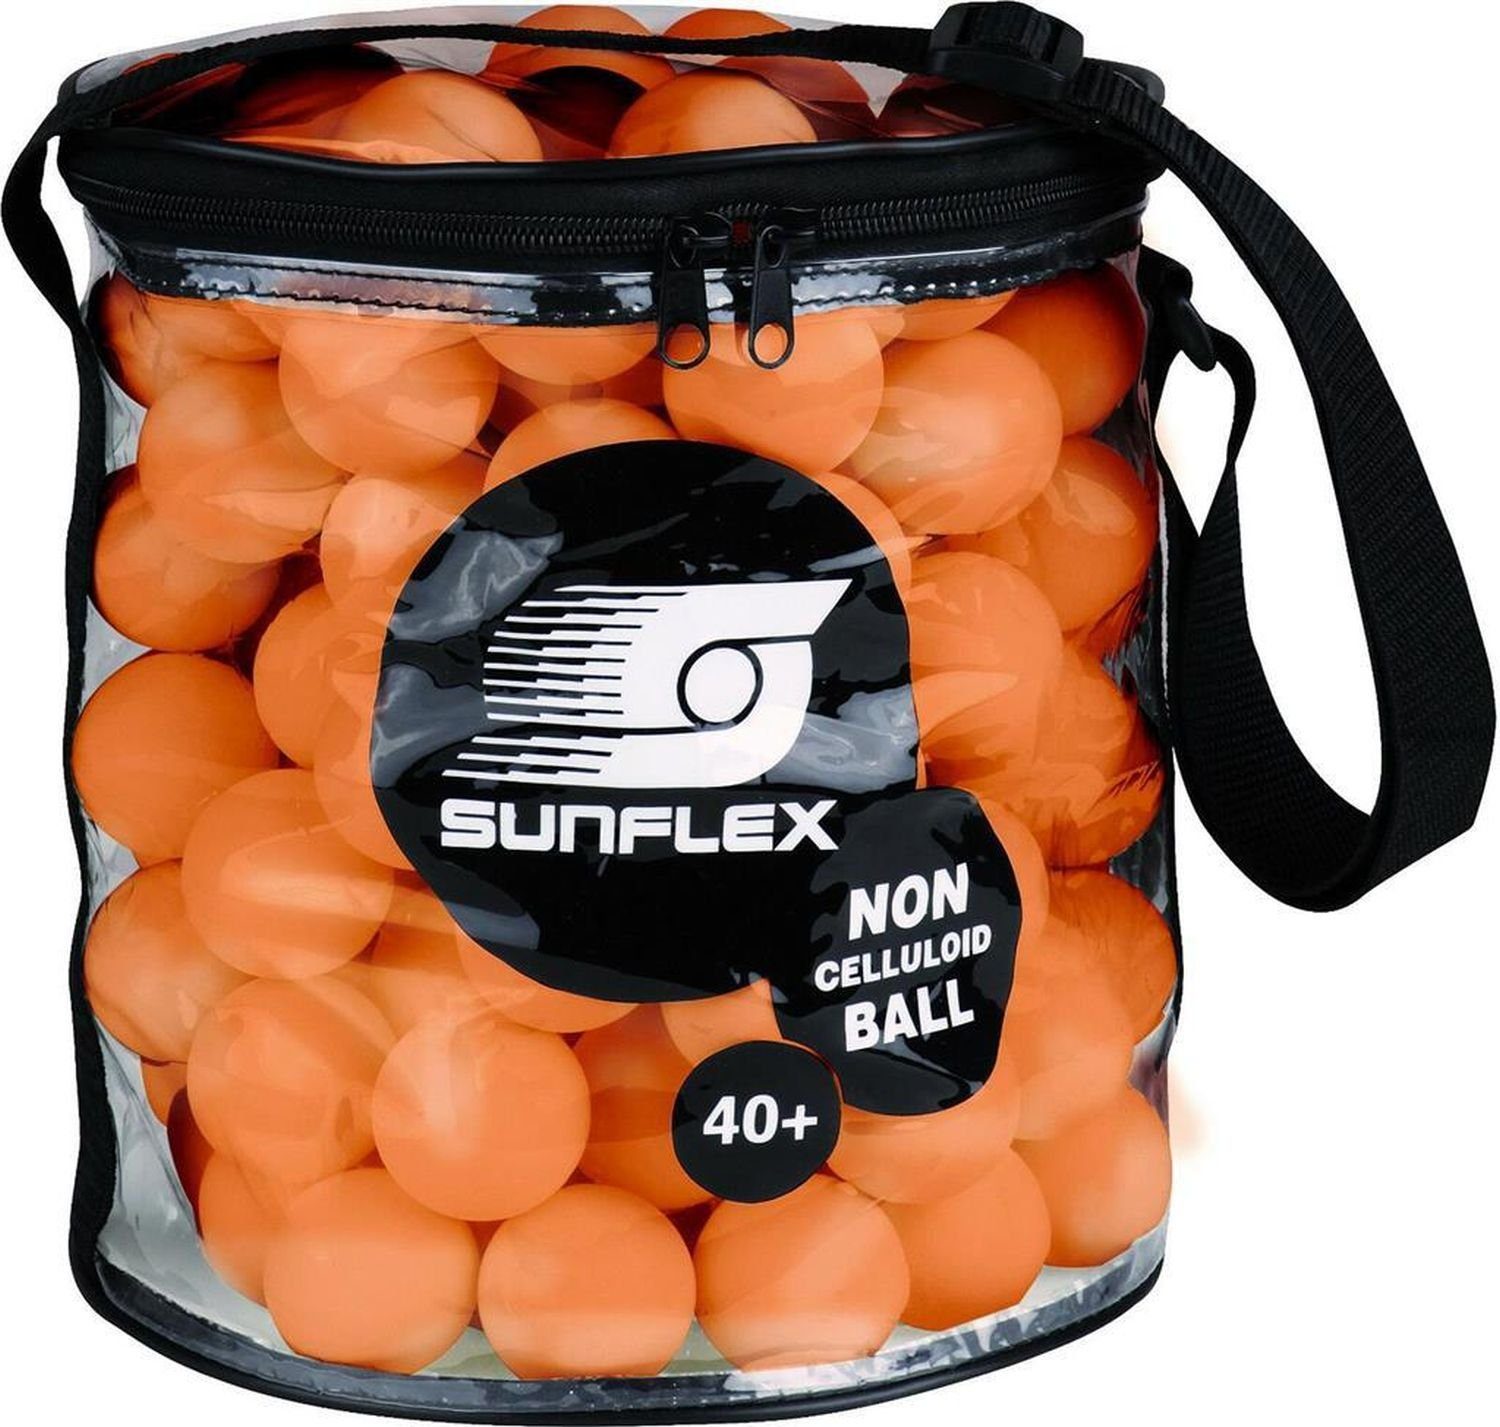 Ball 144 Balls inkl. Bälle 40+ Tischtennisball Tischtennis Balltasche Tischtennisball Sunflex Tischtennisbälle orange,